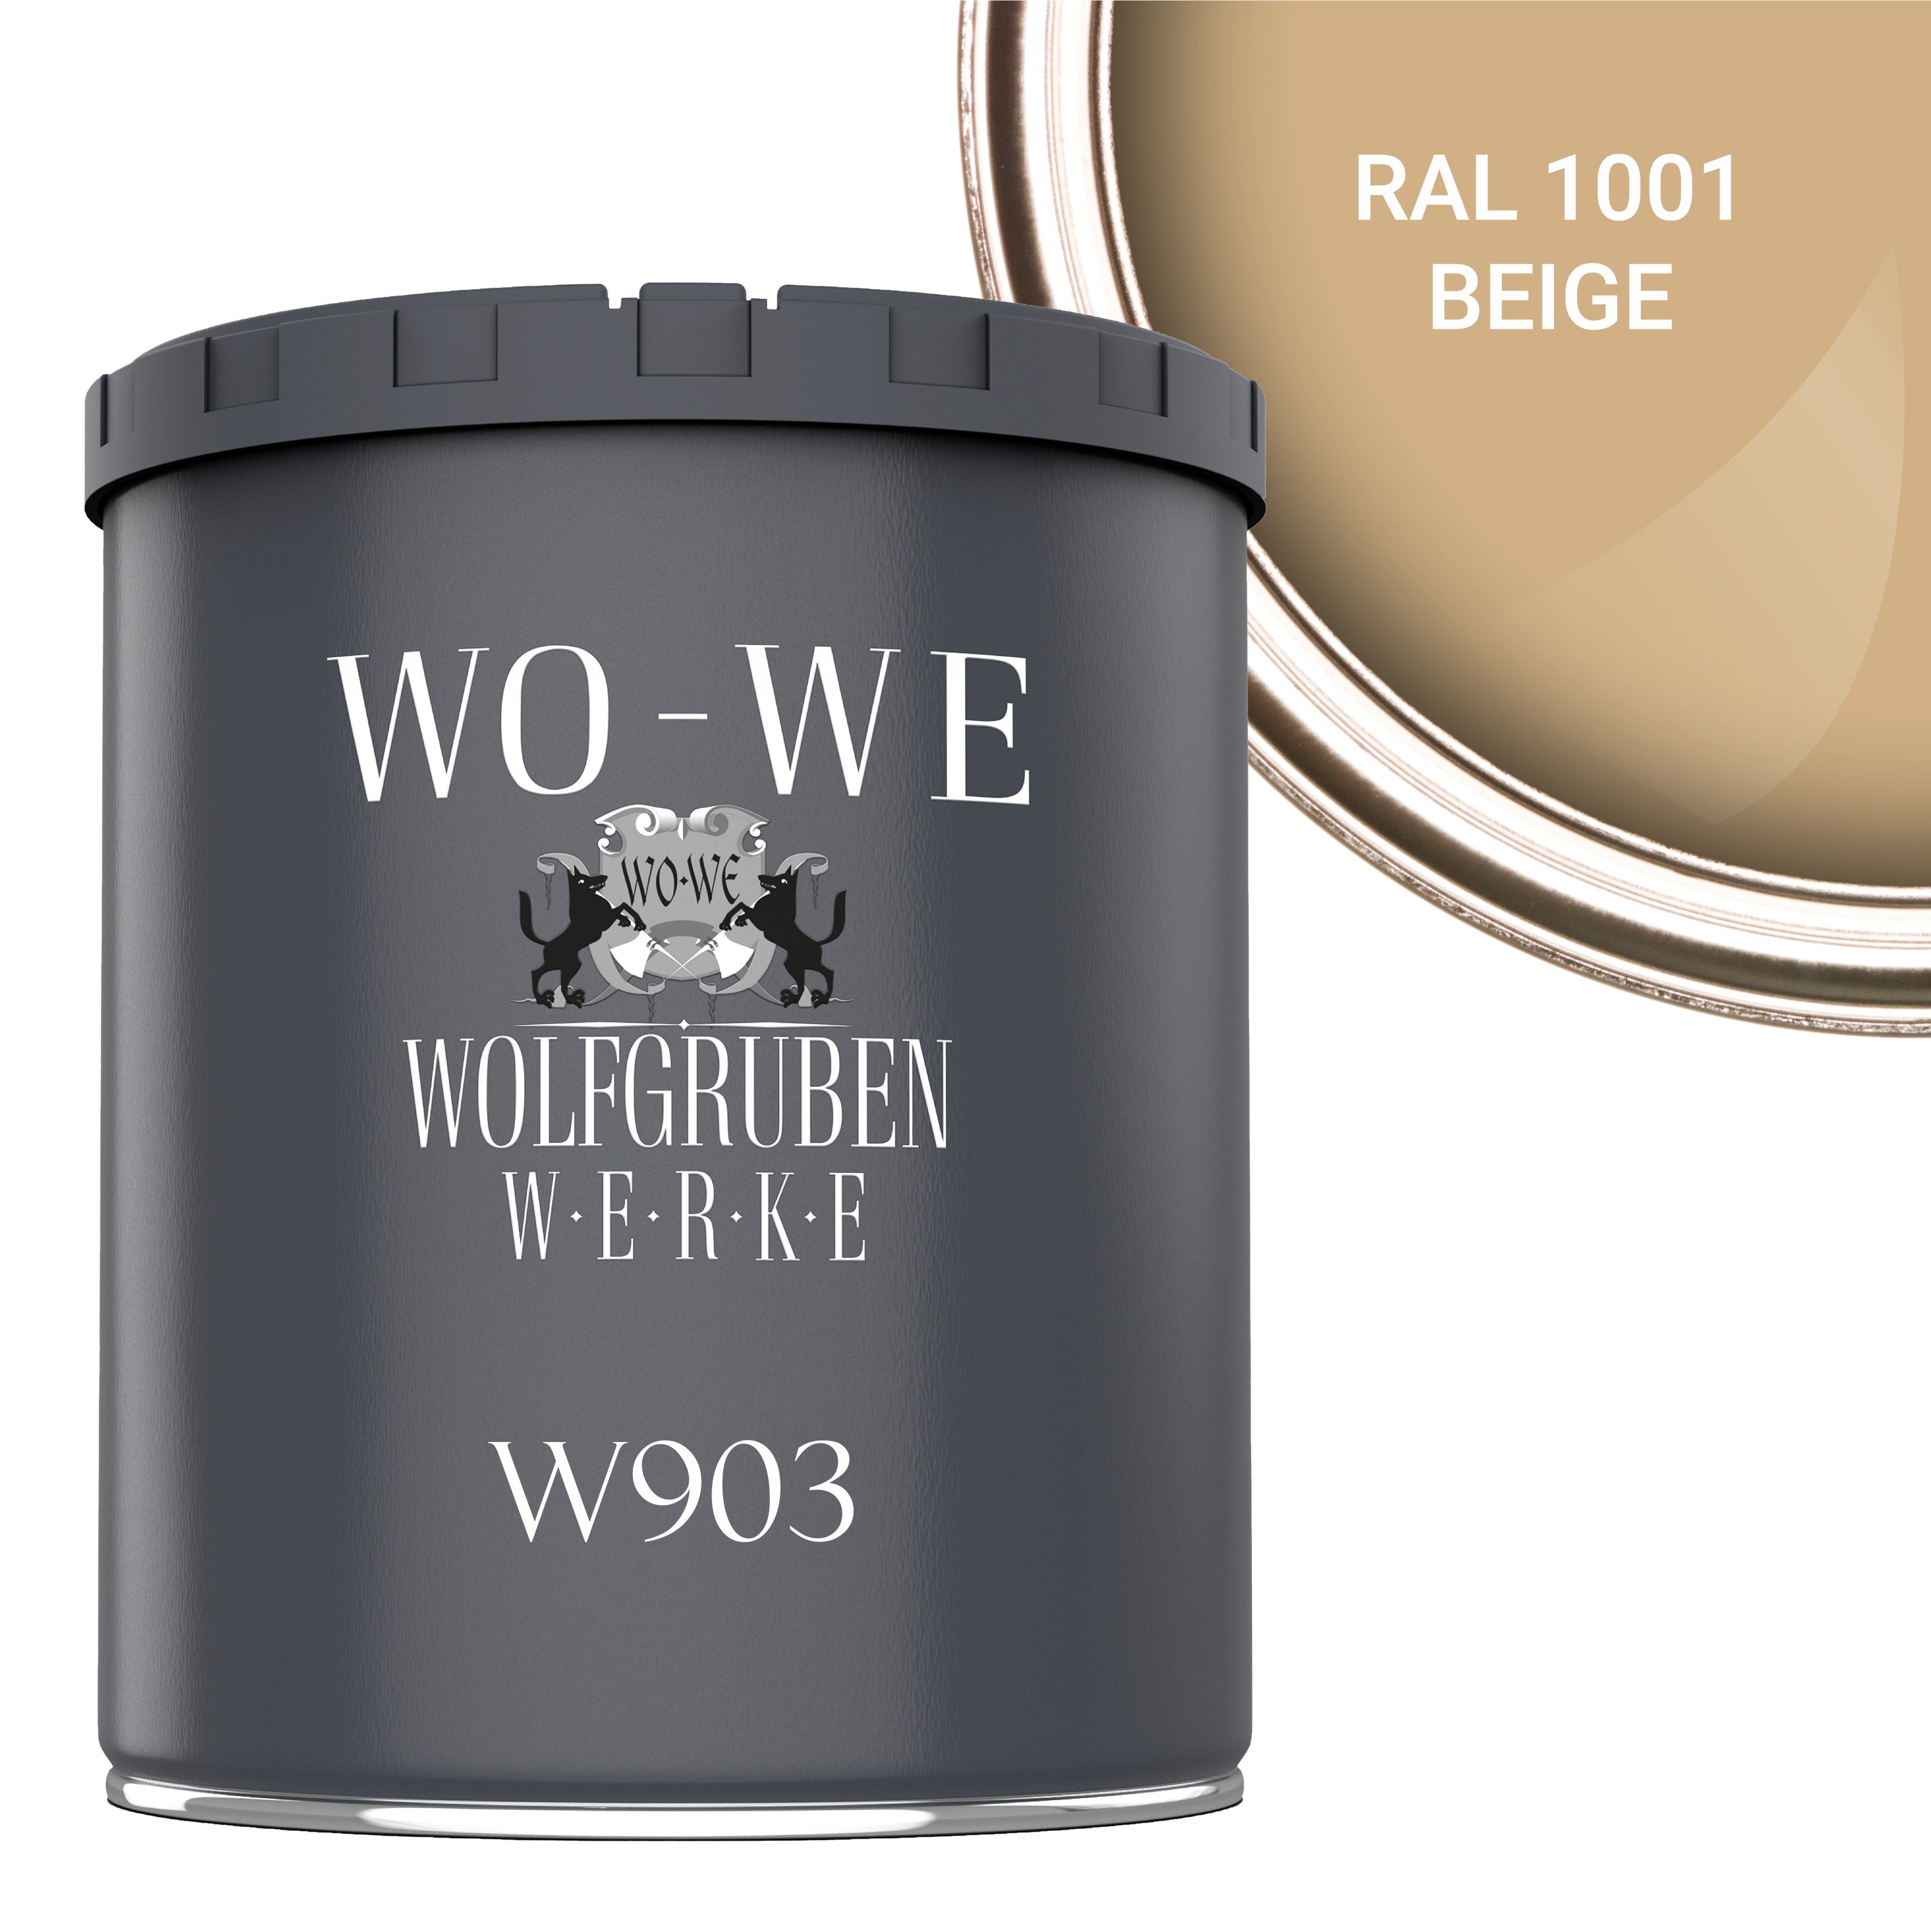 WO-WE Heizkörperlack Heizkörperfarbe Wasserbasis RAL W903, 1001 1-10L, Beige Heizungsfarbe